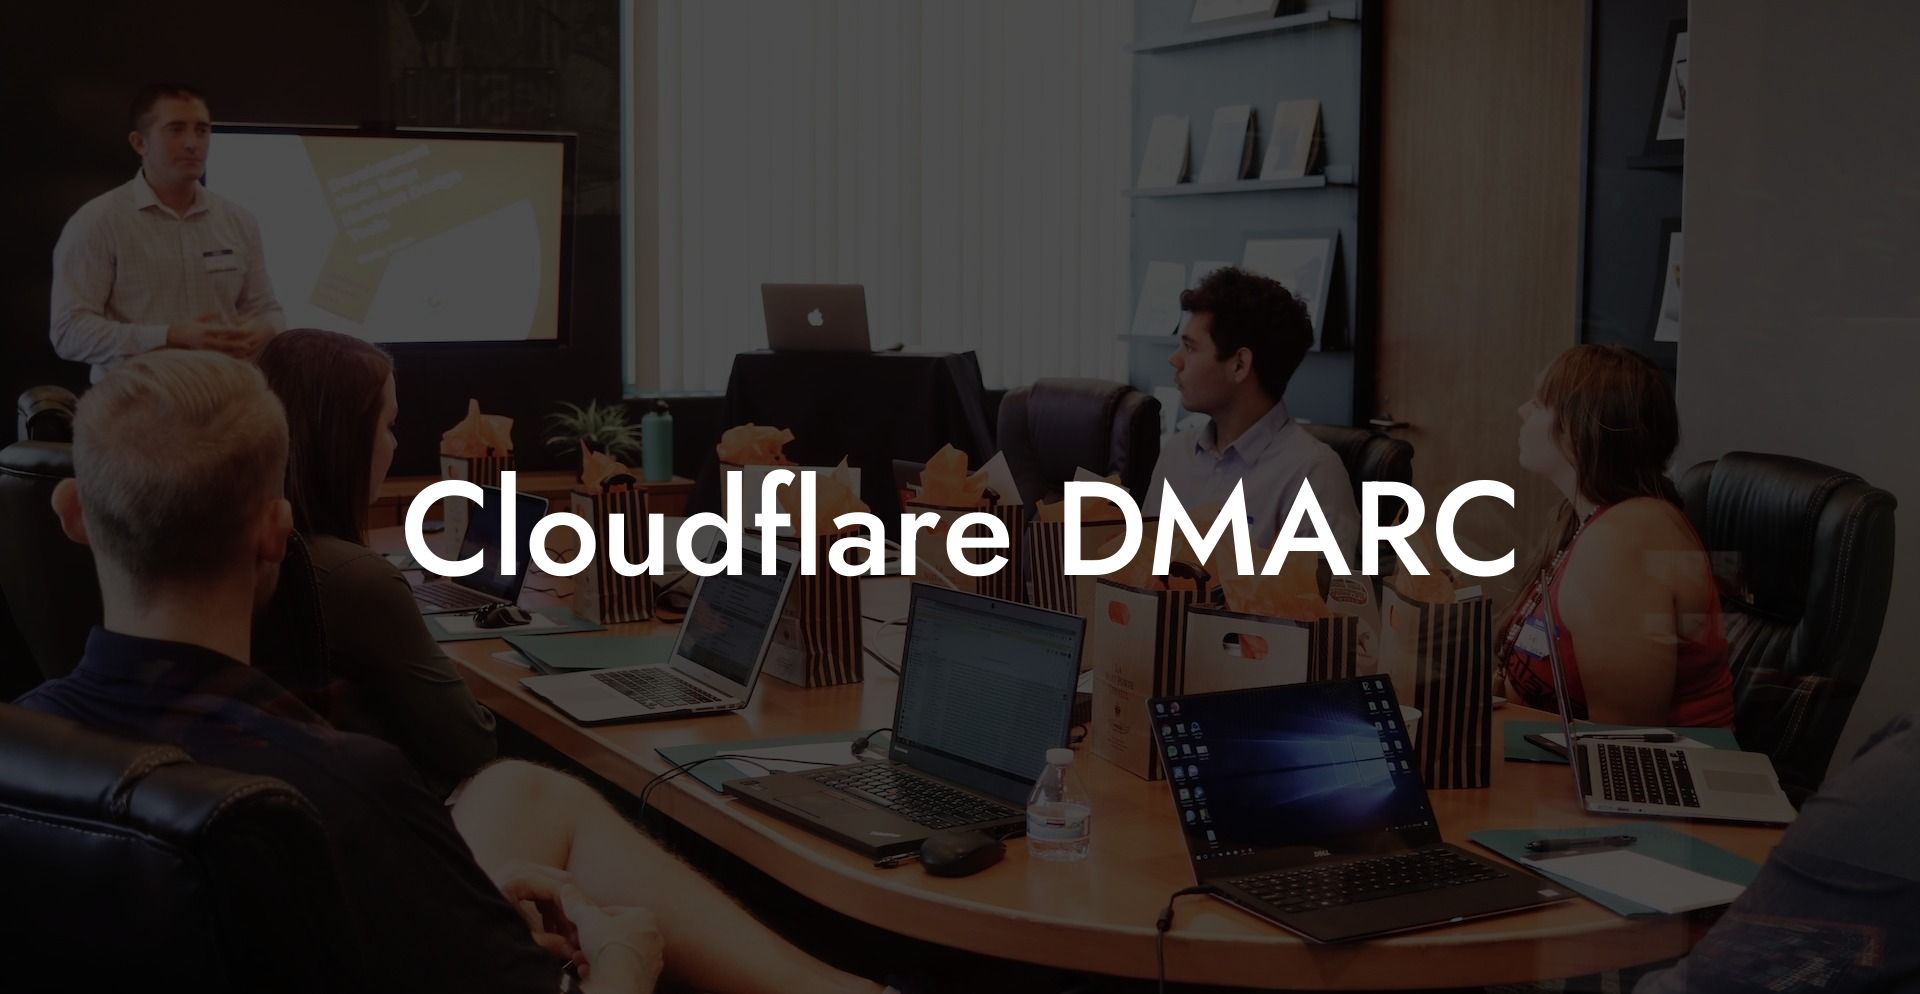 Cloudflare DMARC